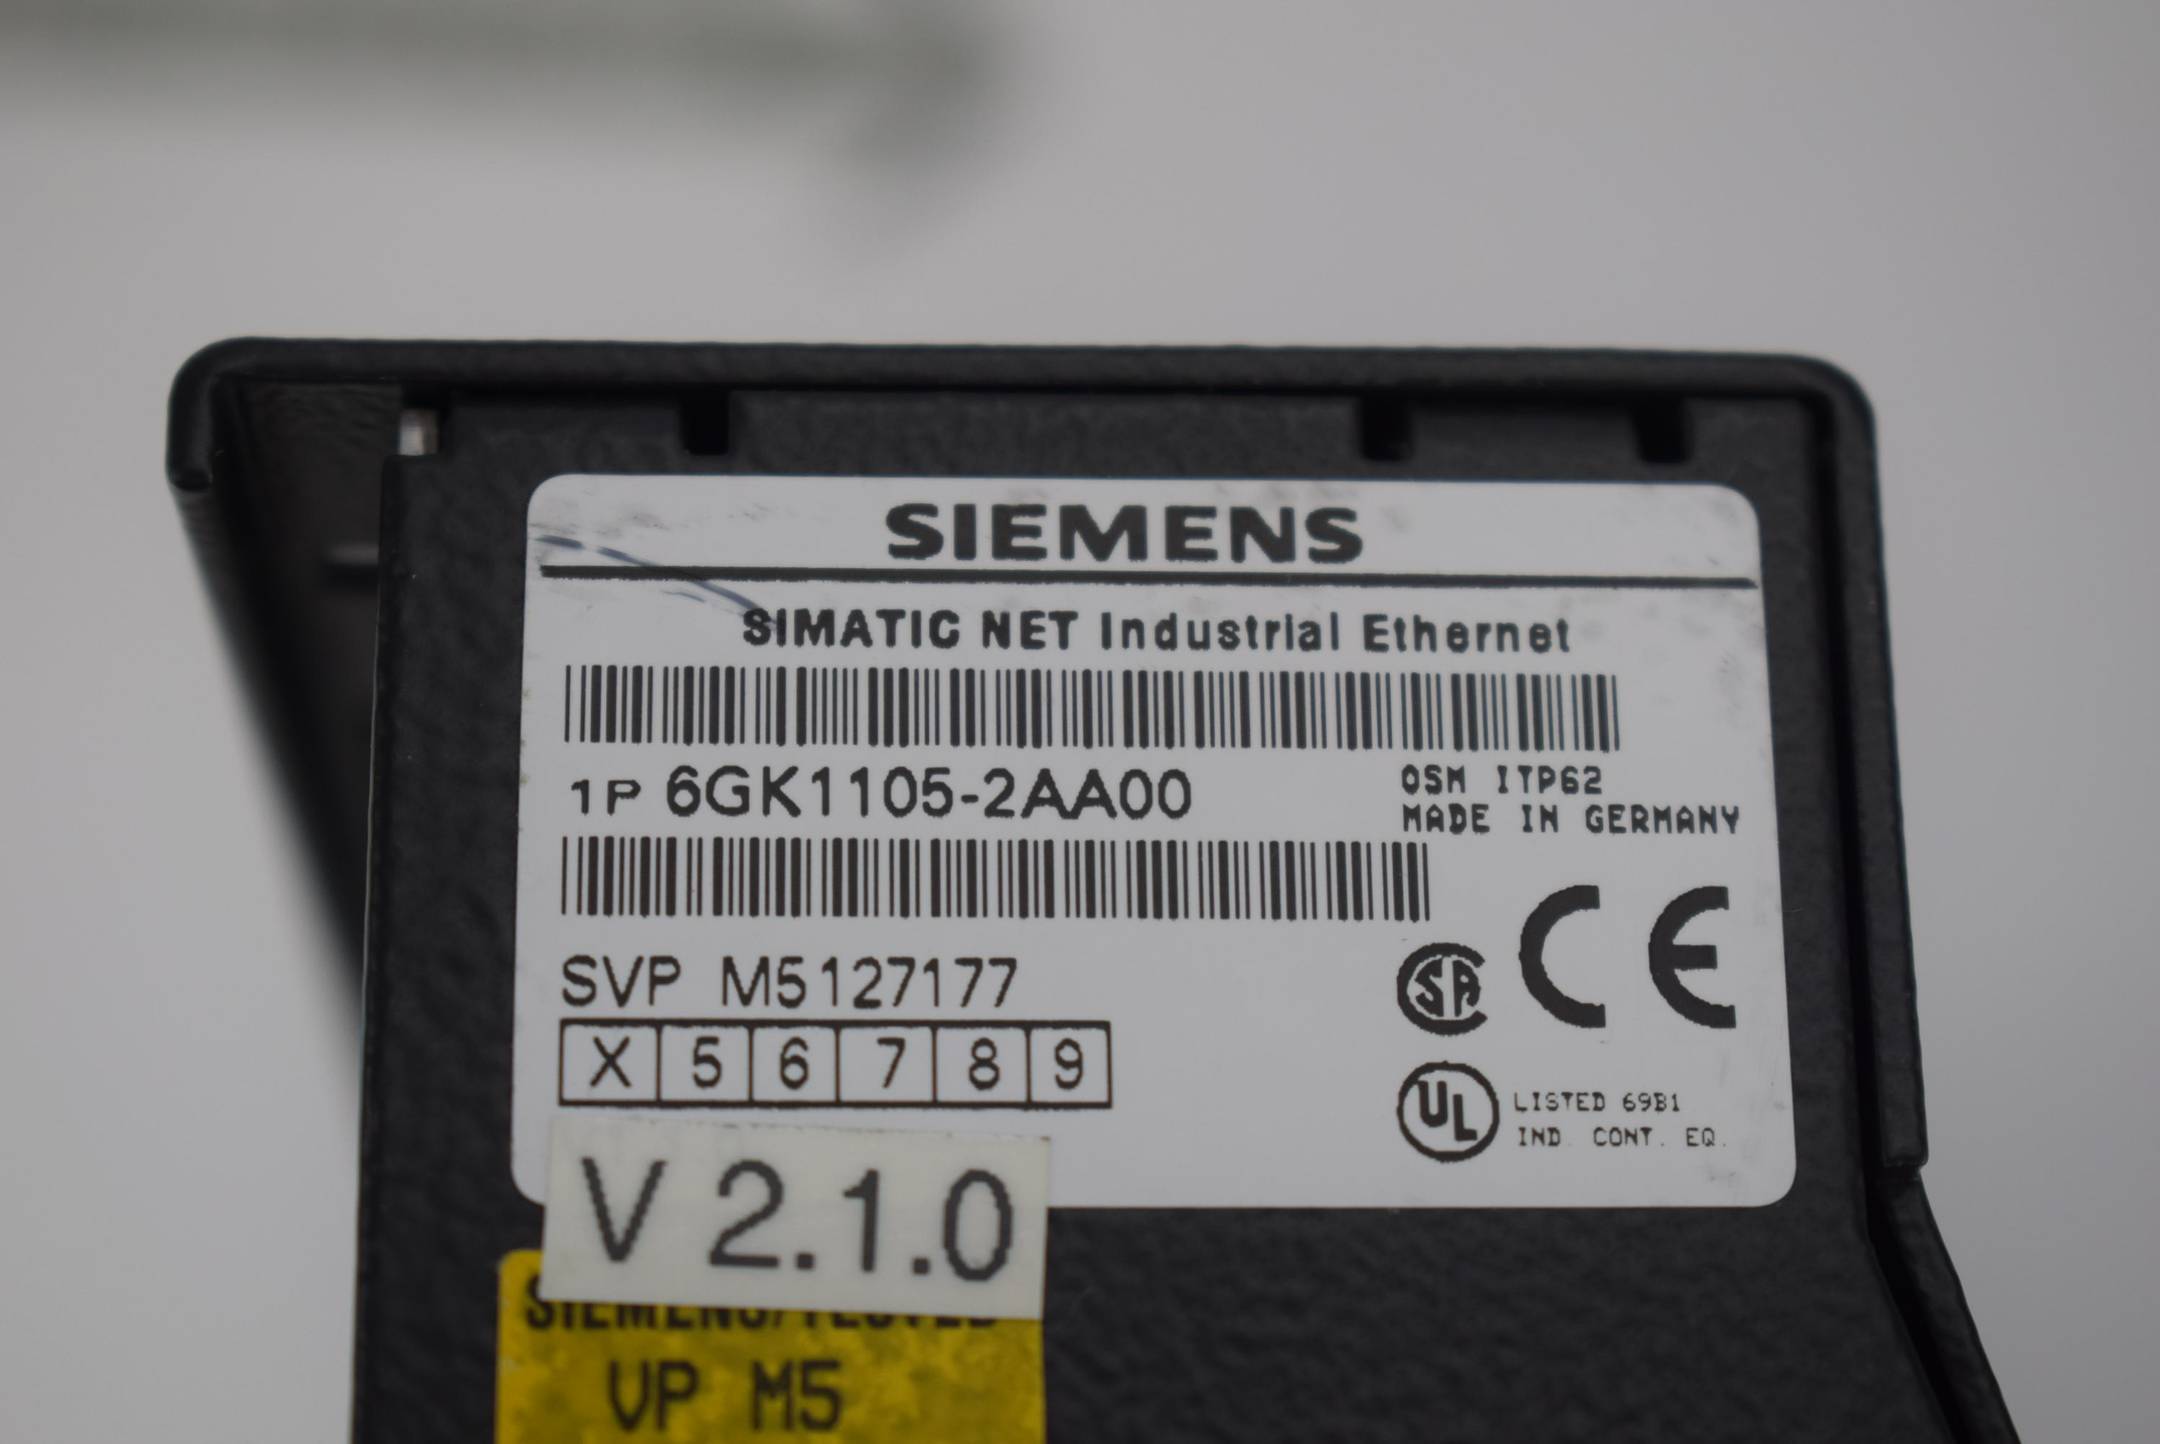 Siemens simatic NET OSM ITP62 6GK1 105-2AA00 ( 6GK1105-2AA00 ) 